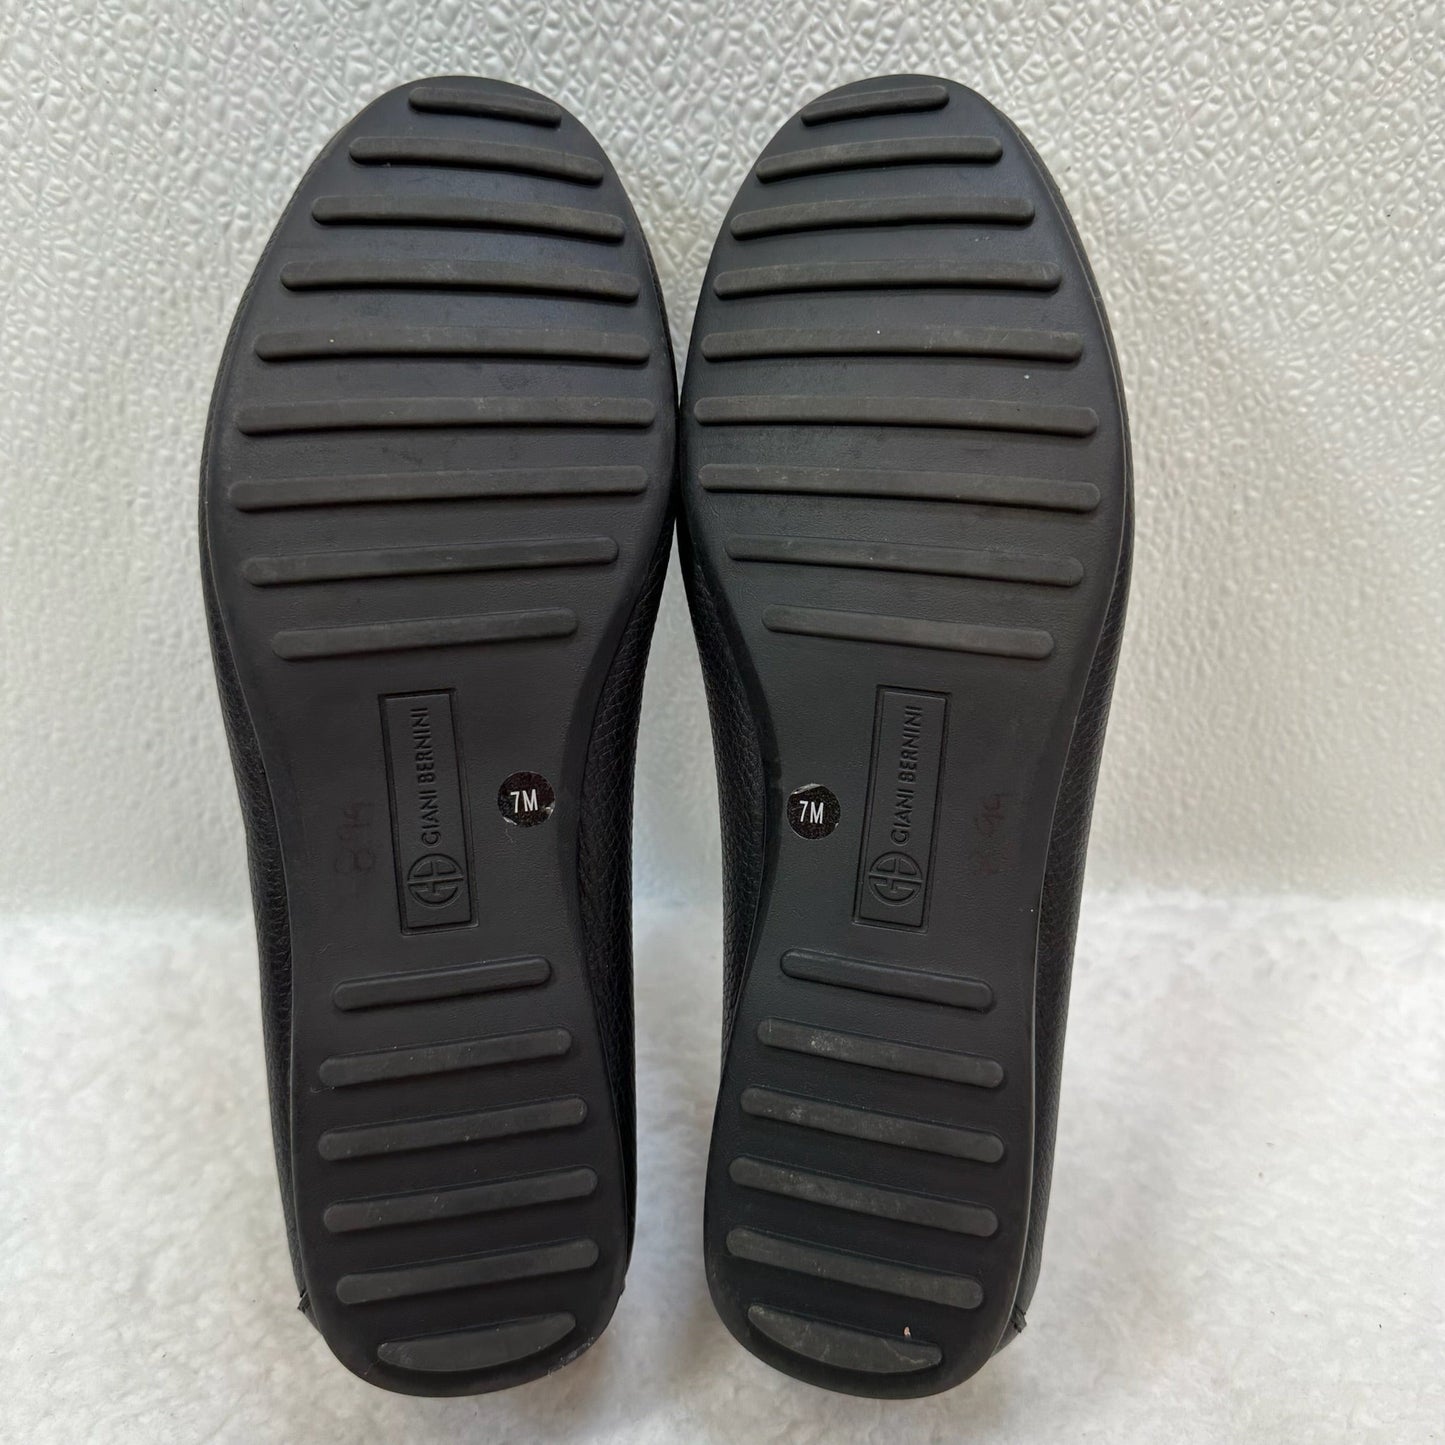 Black Shoes Flats Loafer Oxford Giani Bernini, Size 7